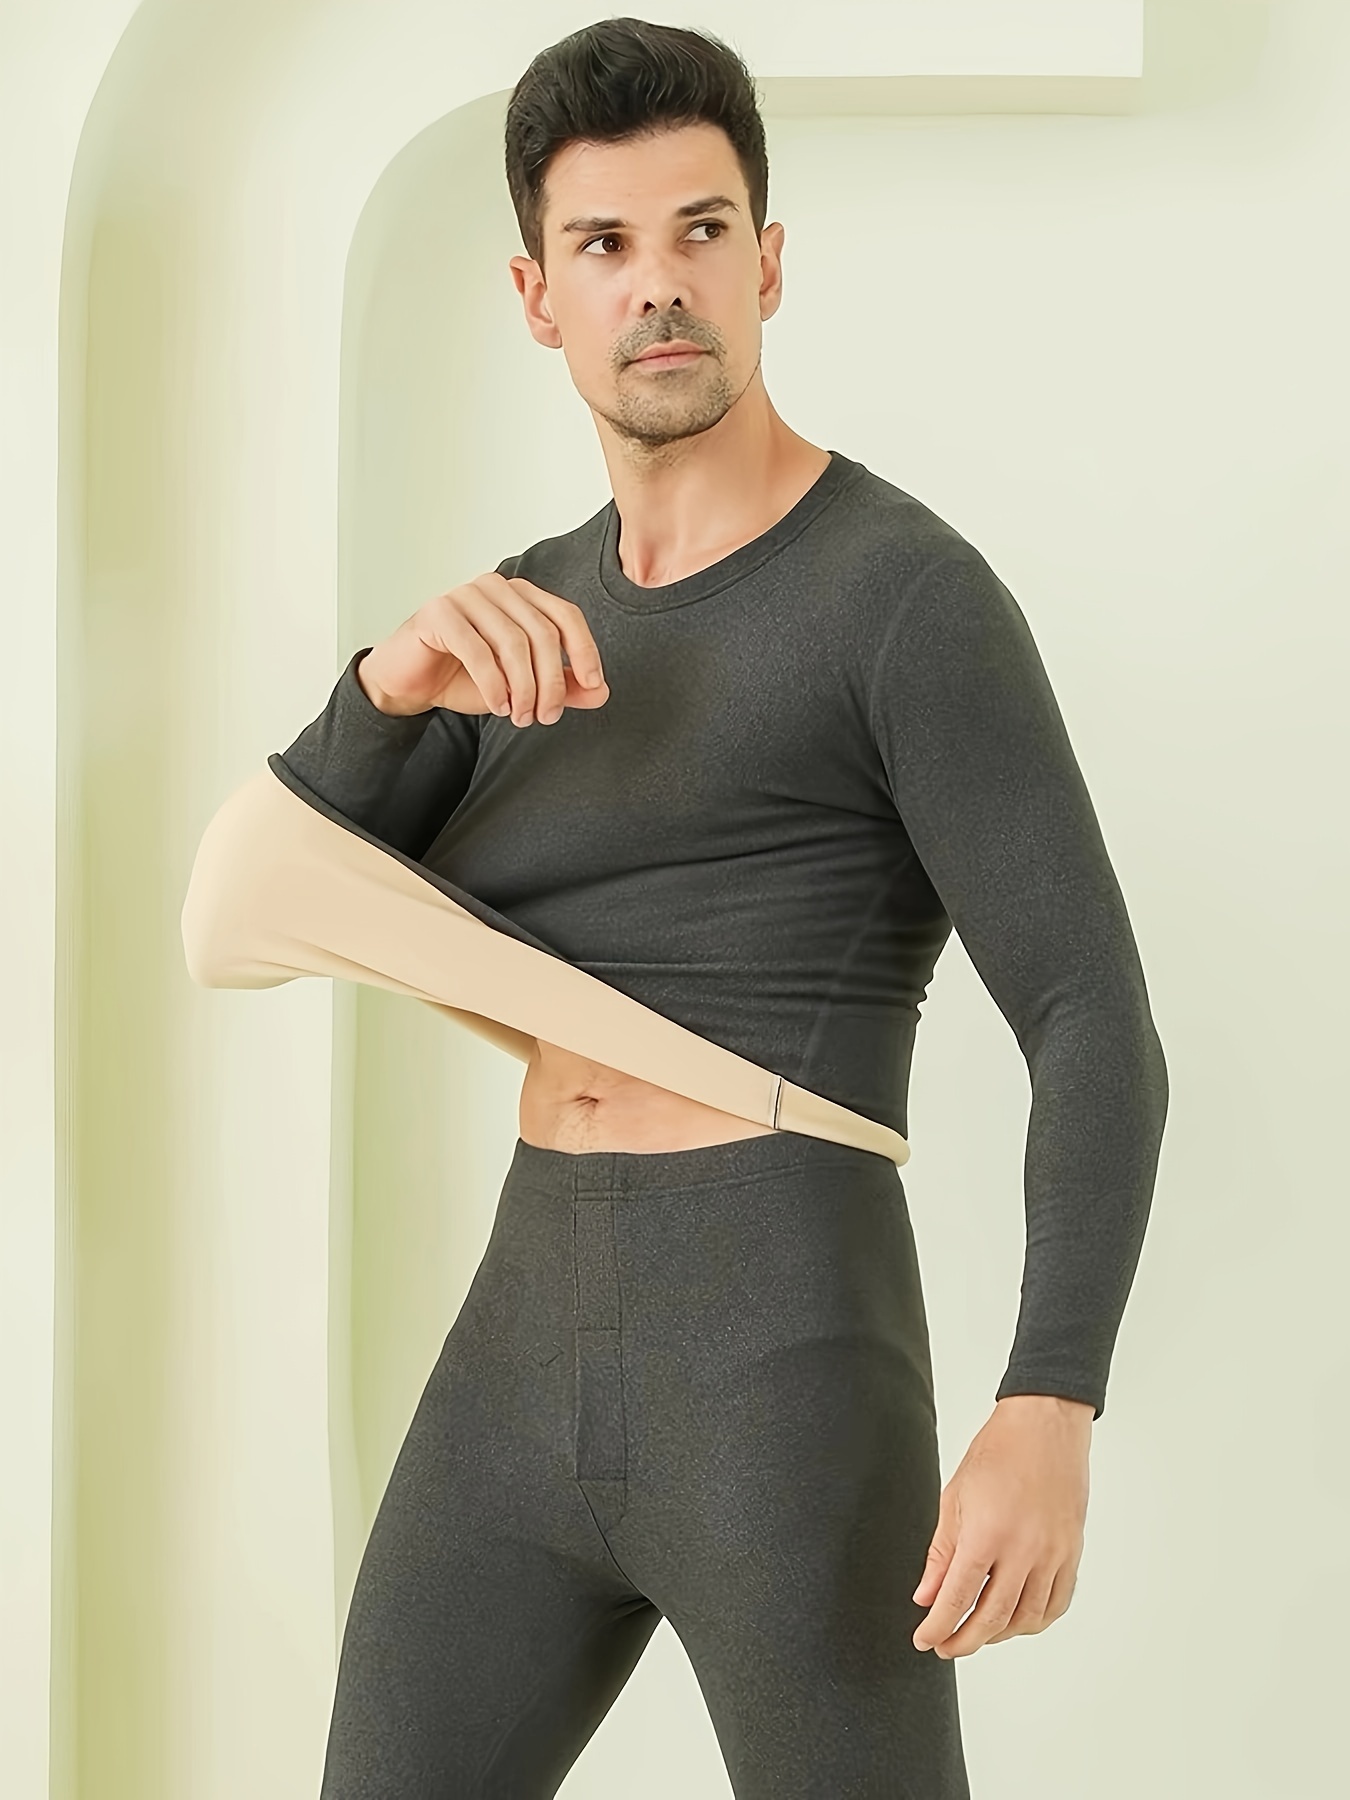 Mens Thermal Underwear Set, Fleece Long Johns for Men Extreme Cold